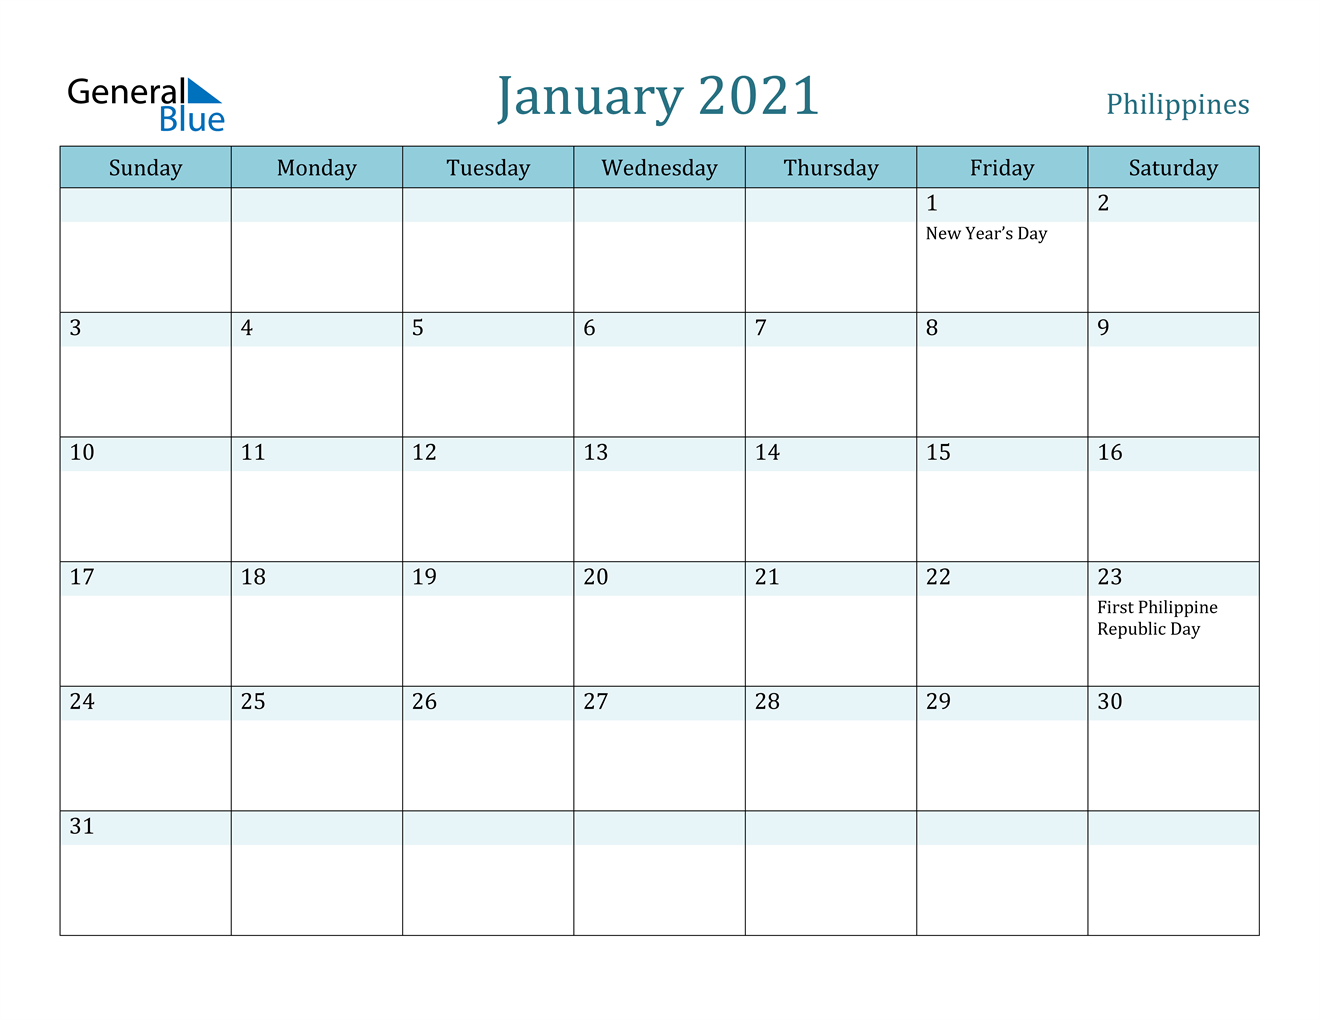 January 2021 Calendar - Philippines